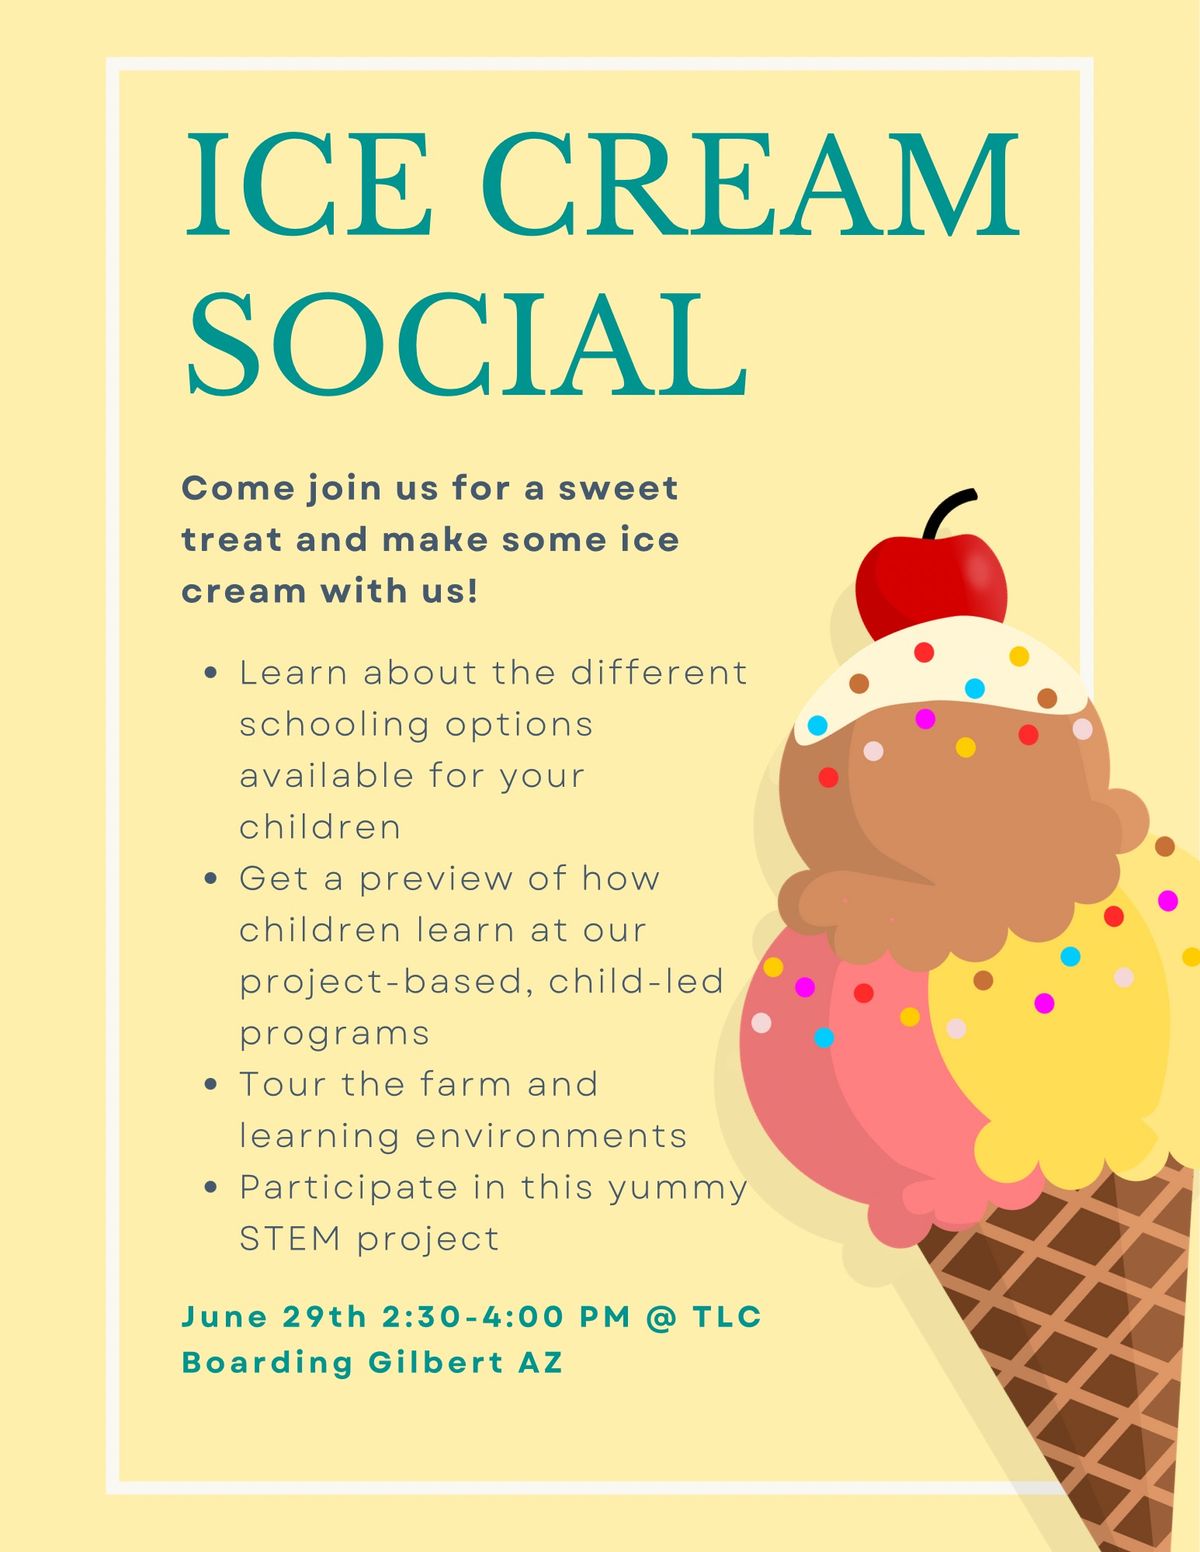 Ice cream Social & School Options Exploration 